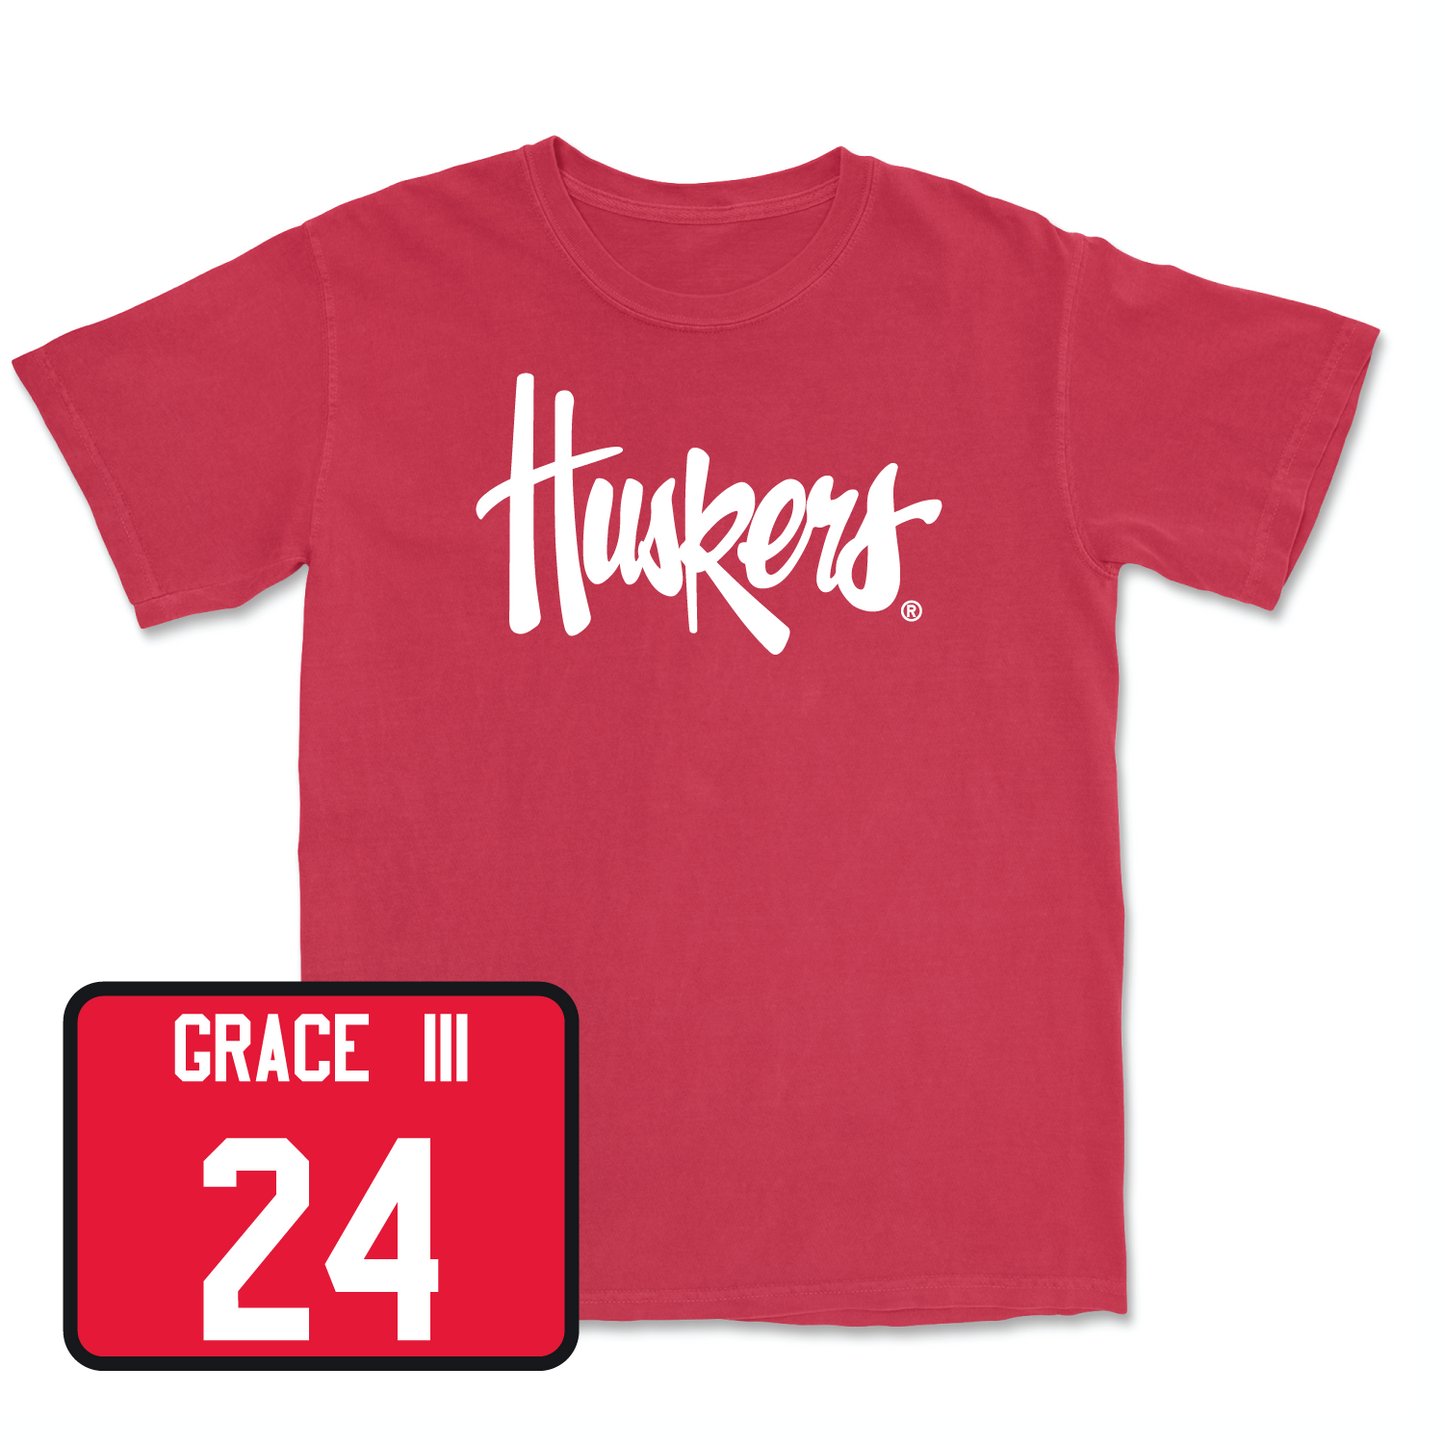 Red Men's Basketball Huskers Tee Youth Medium / Jeffrey Grace III | #24